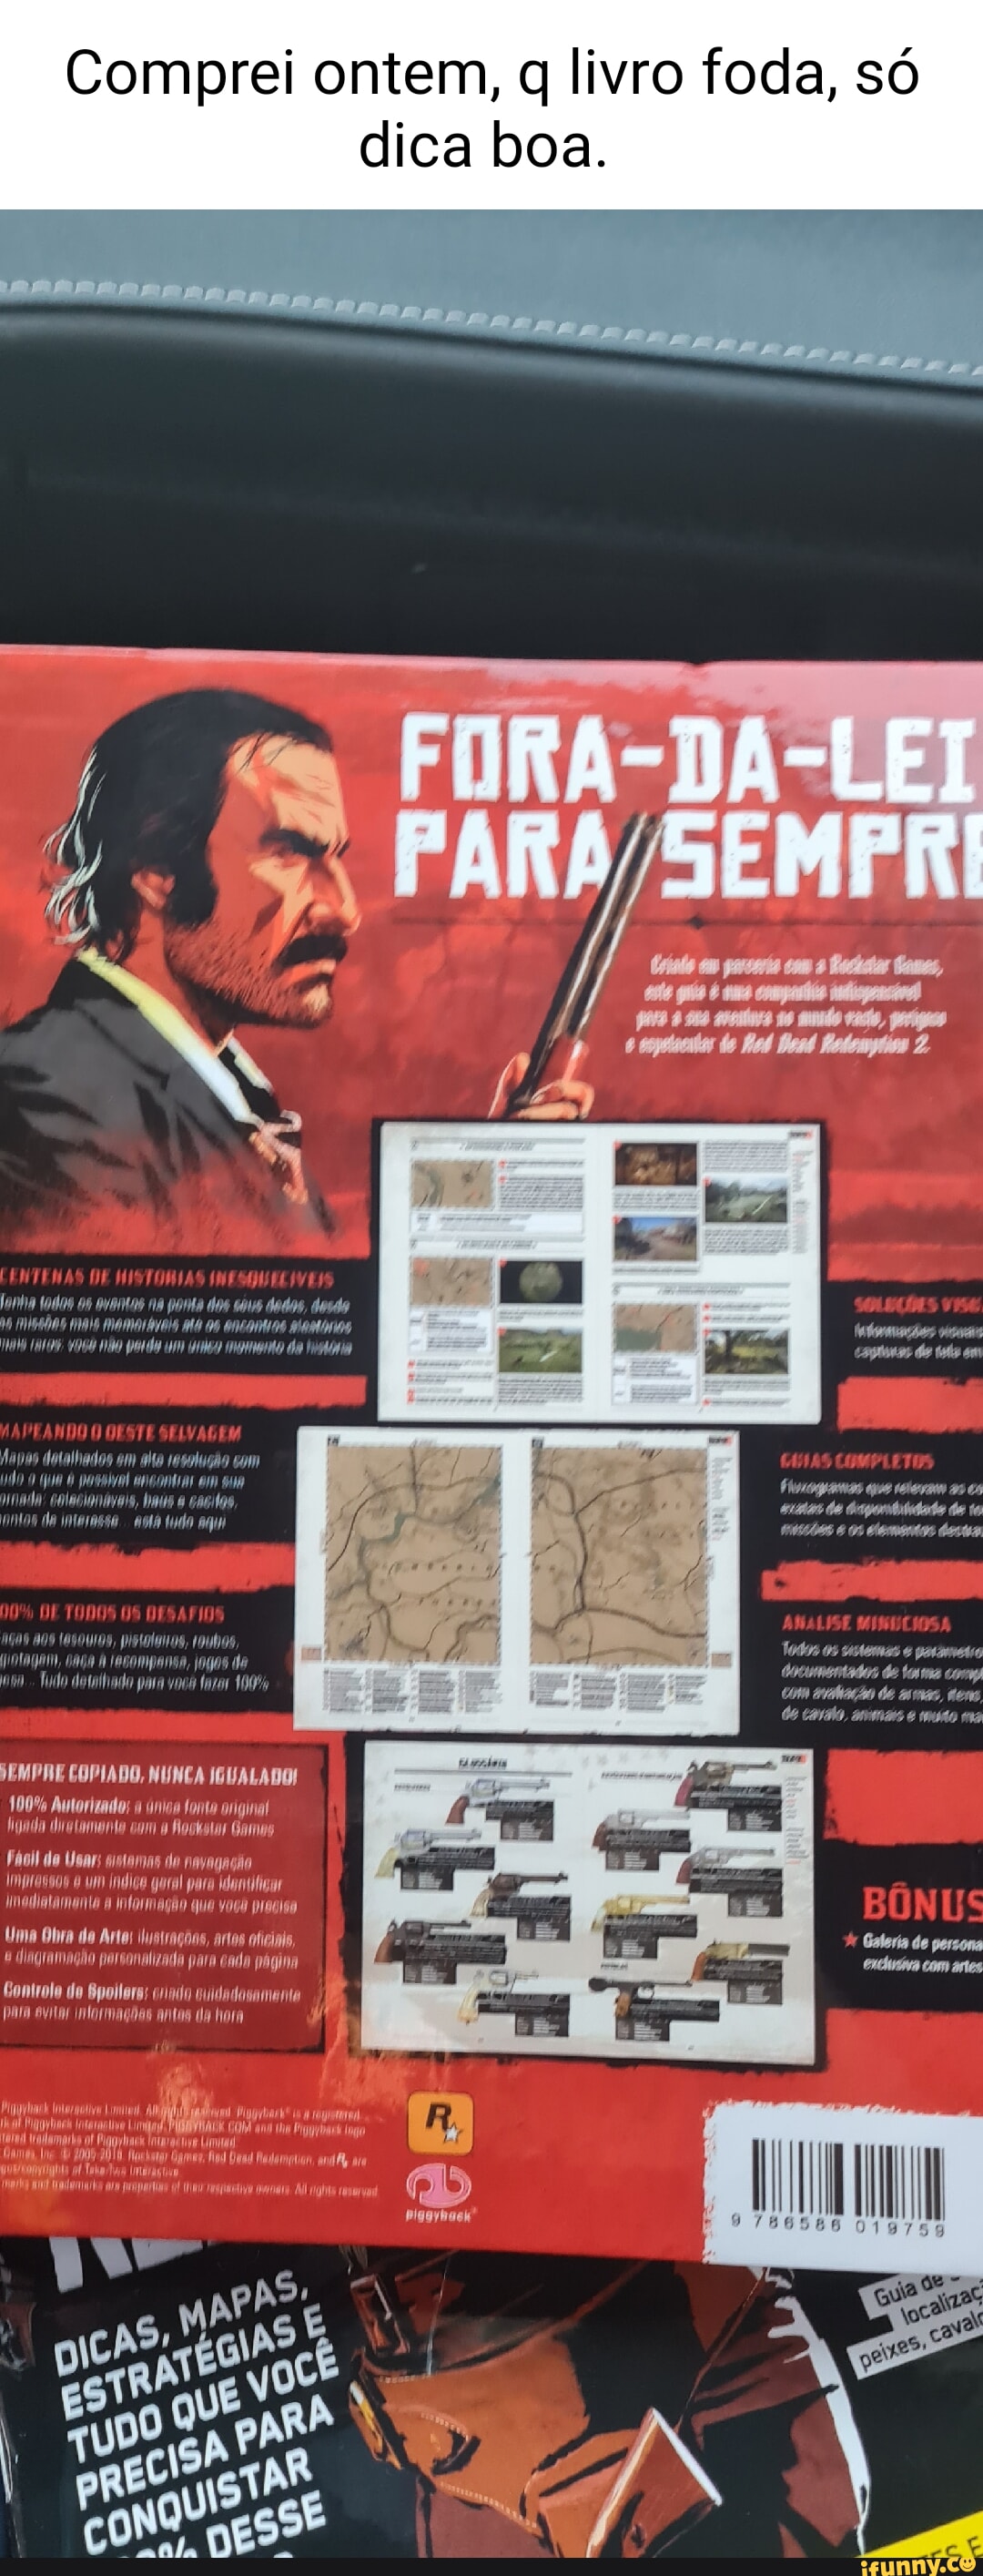 Detonado Mapas! Missões e Tesouros! :: Red Dead Redemption Brasil.